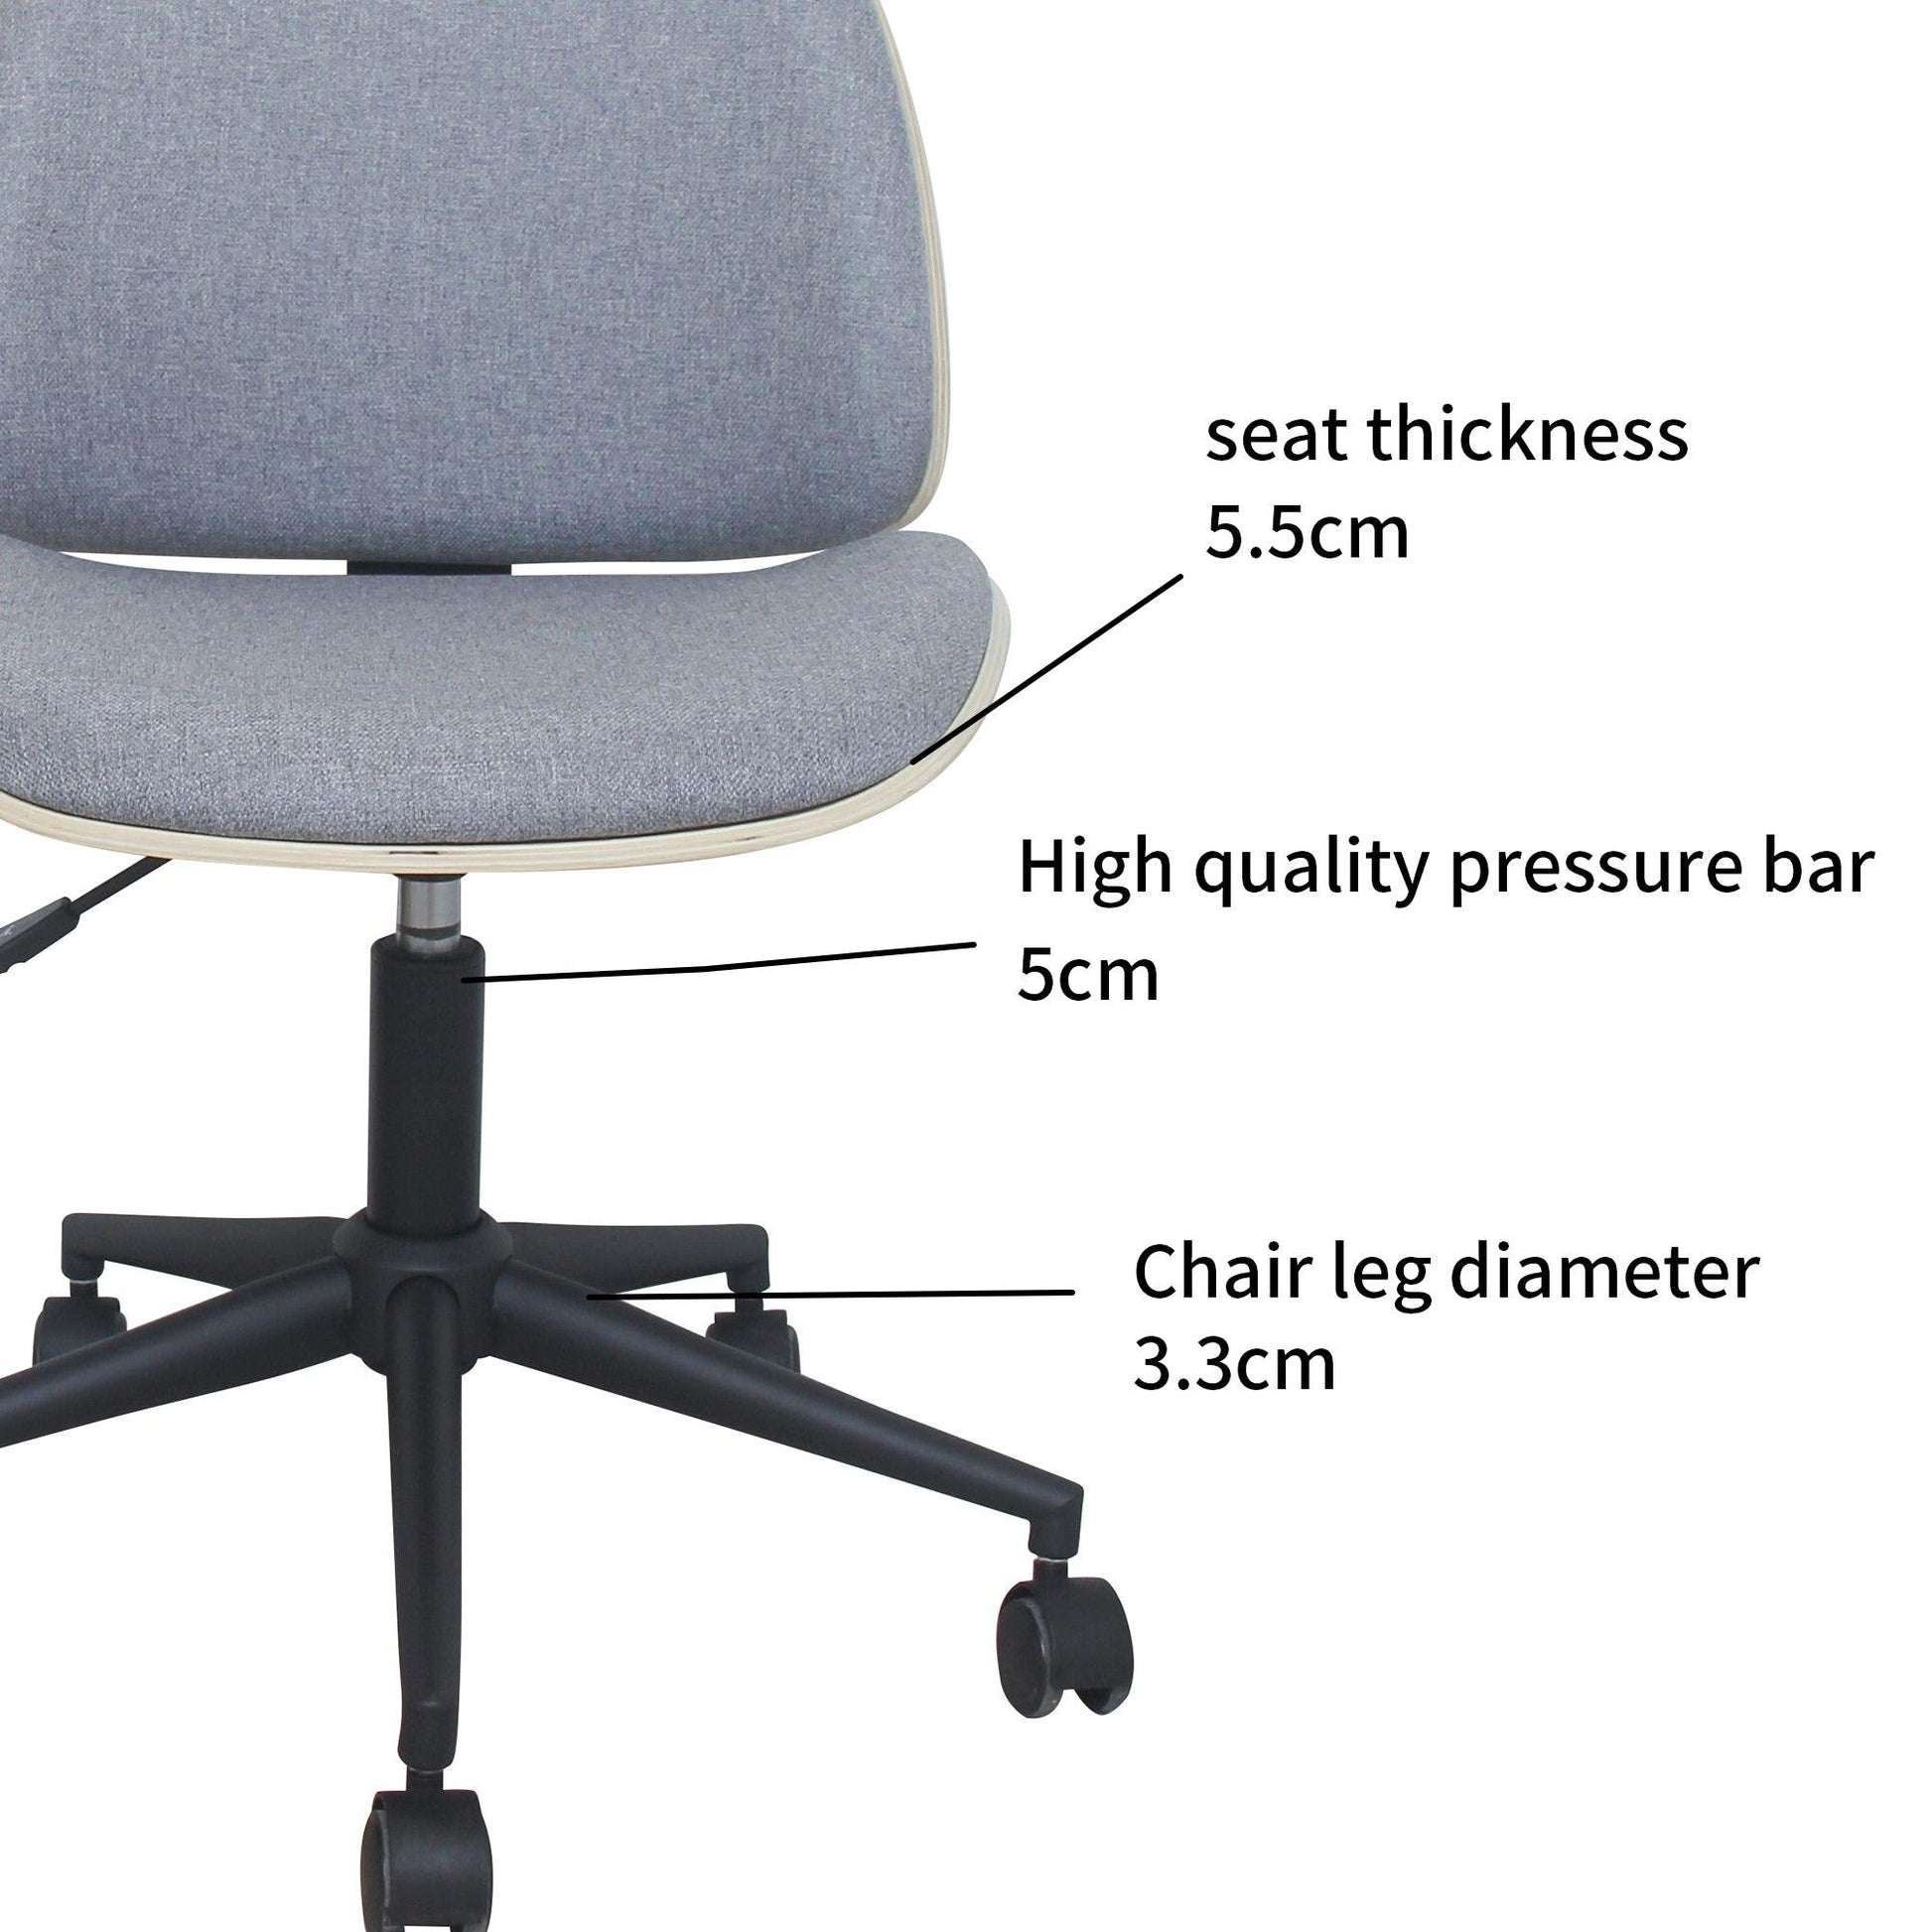 Mio Fabric Adjustable Swivel Office Chair - Grey - Chotto Furniture